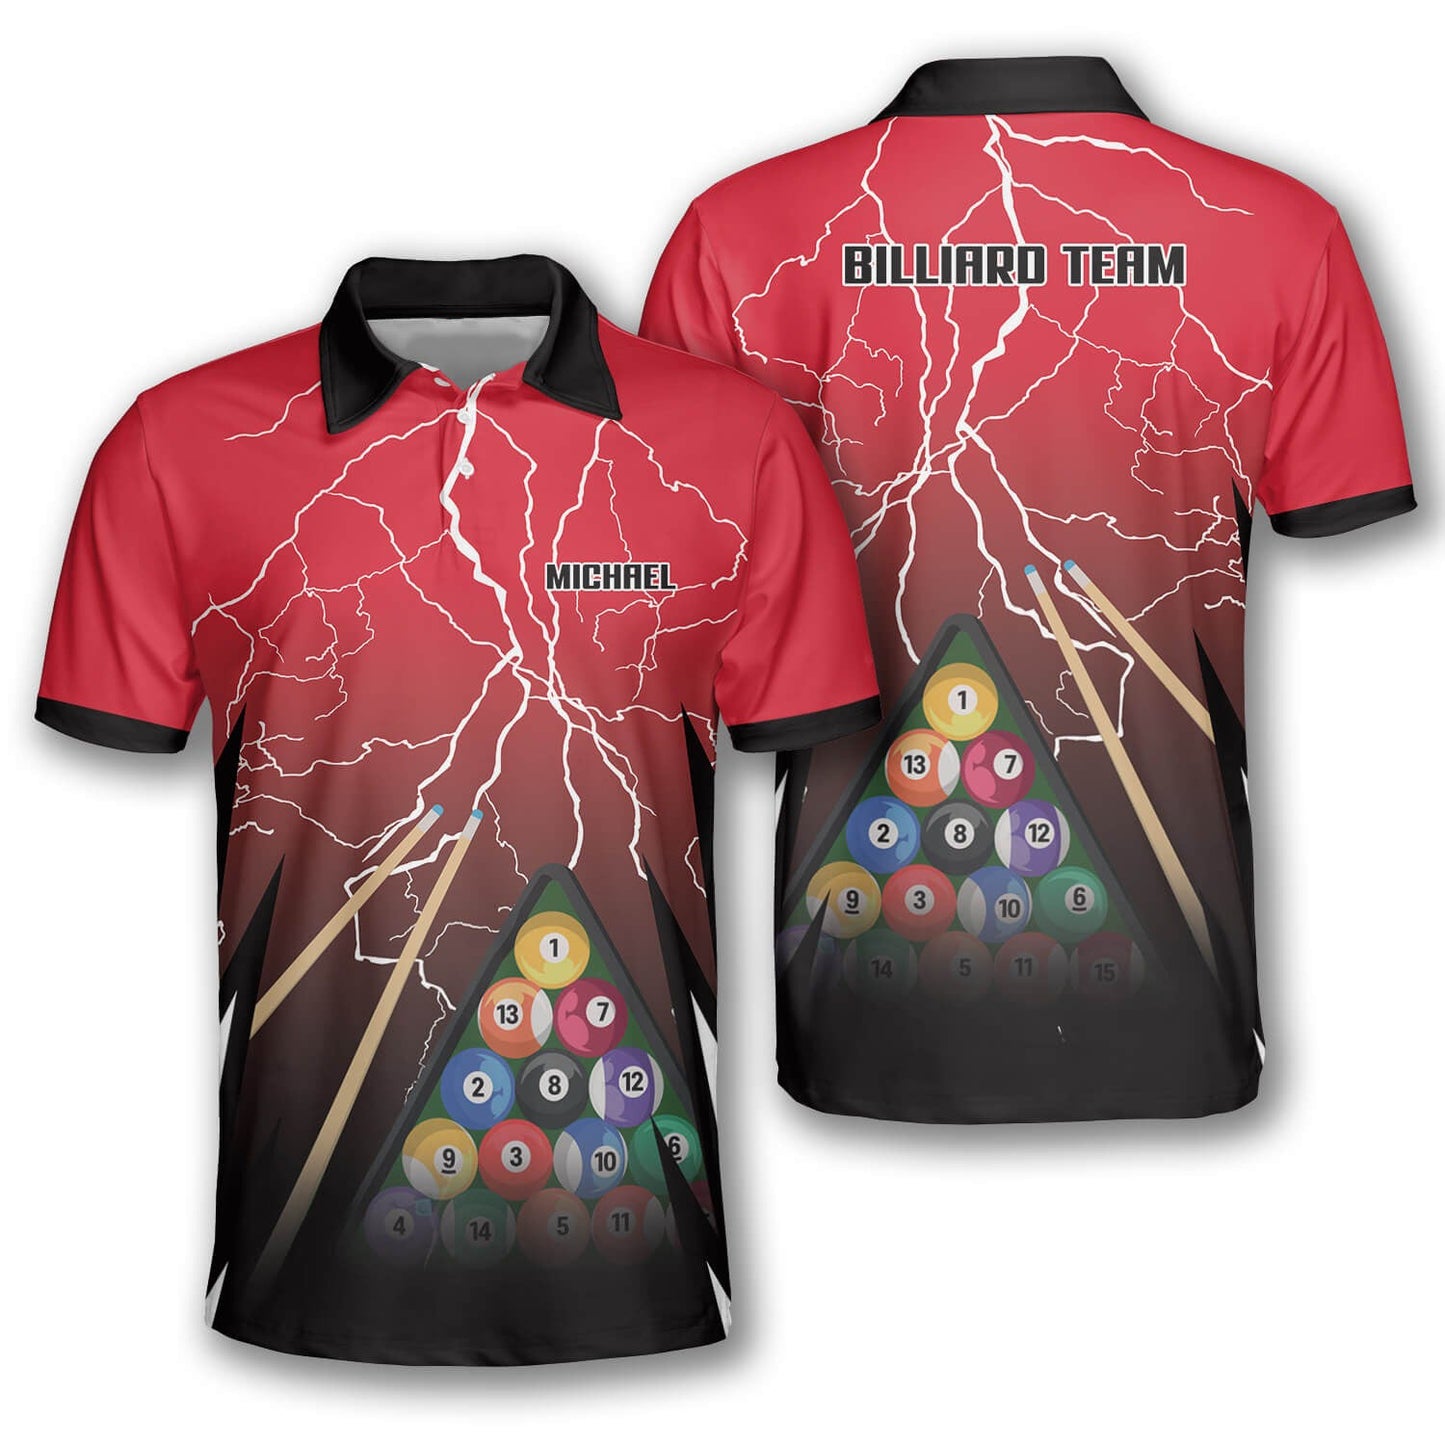 Lasfour Thunder Lightning Red Billiard Personalized Name Unisex Shirt BIA0488